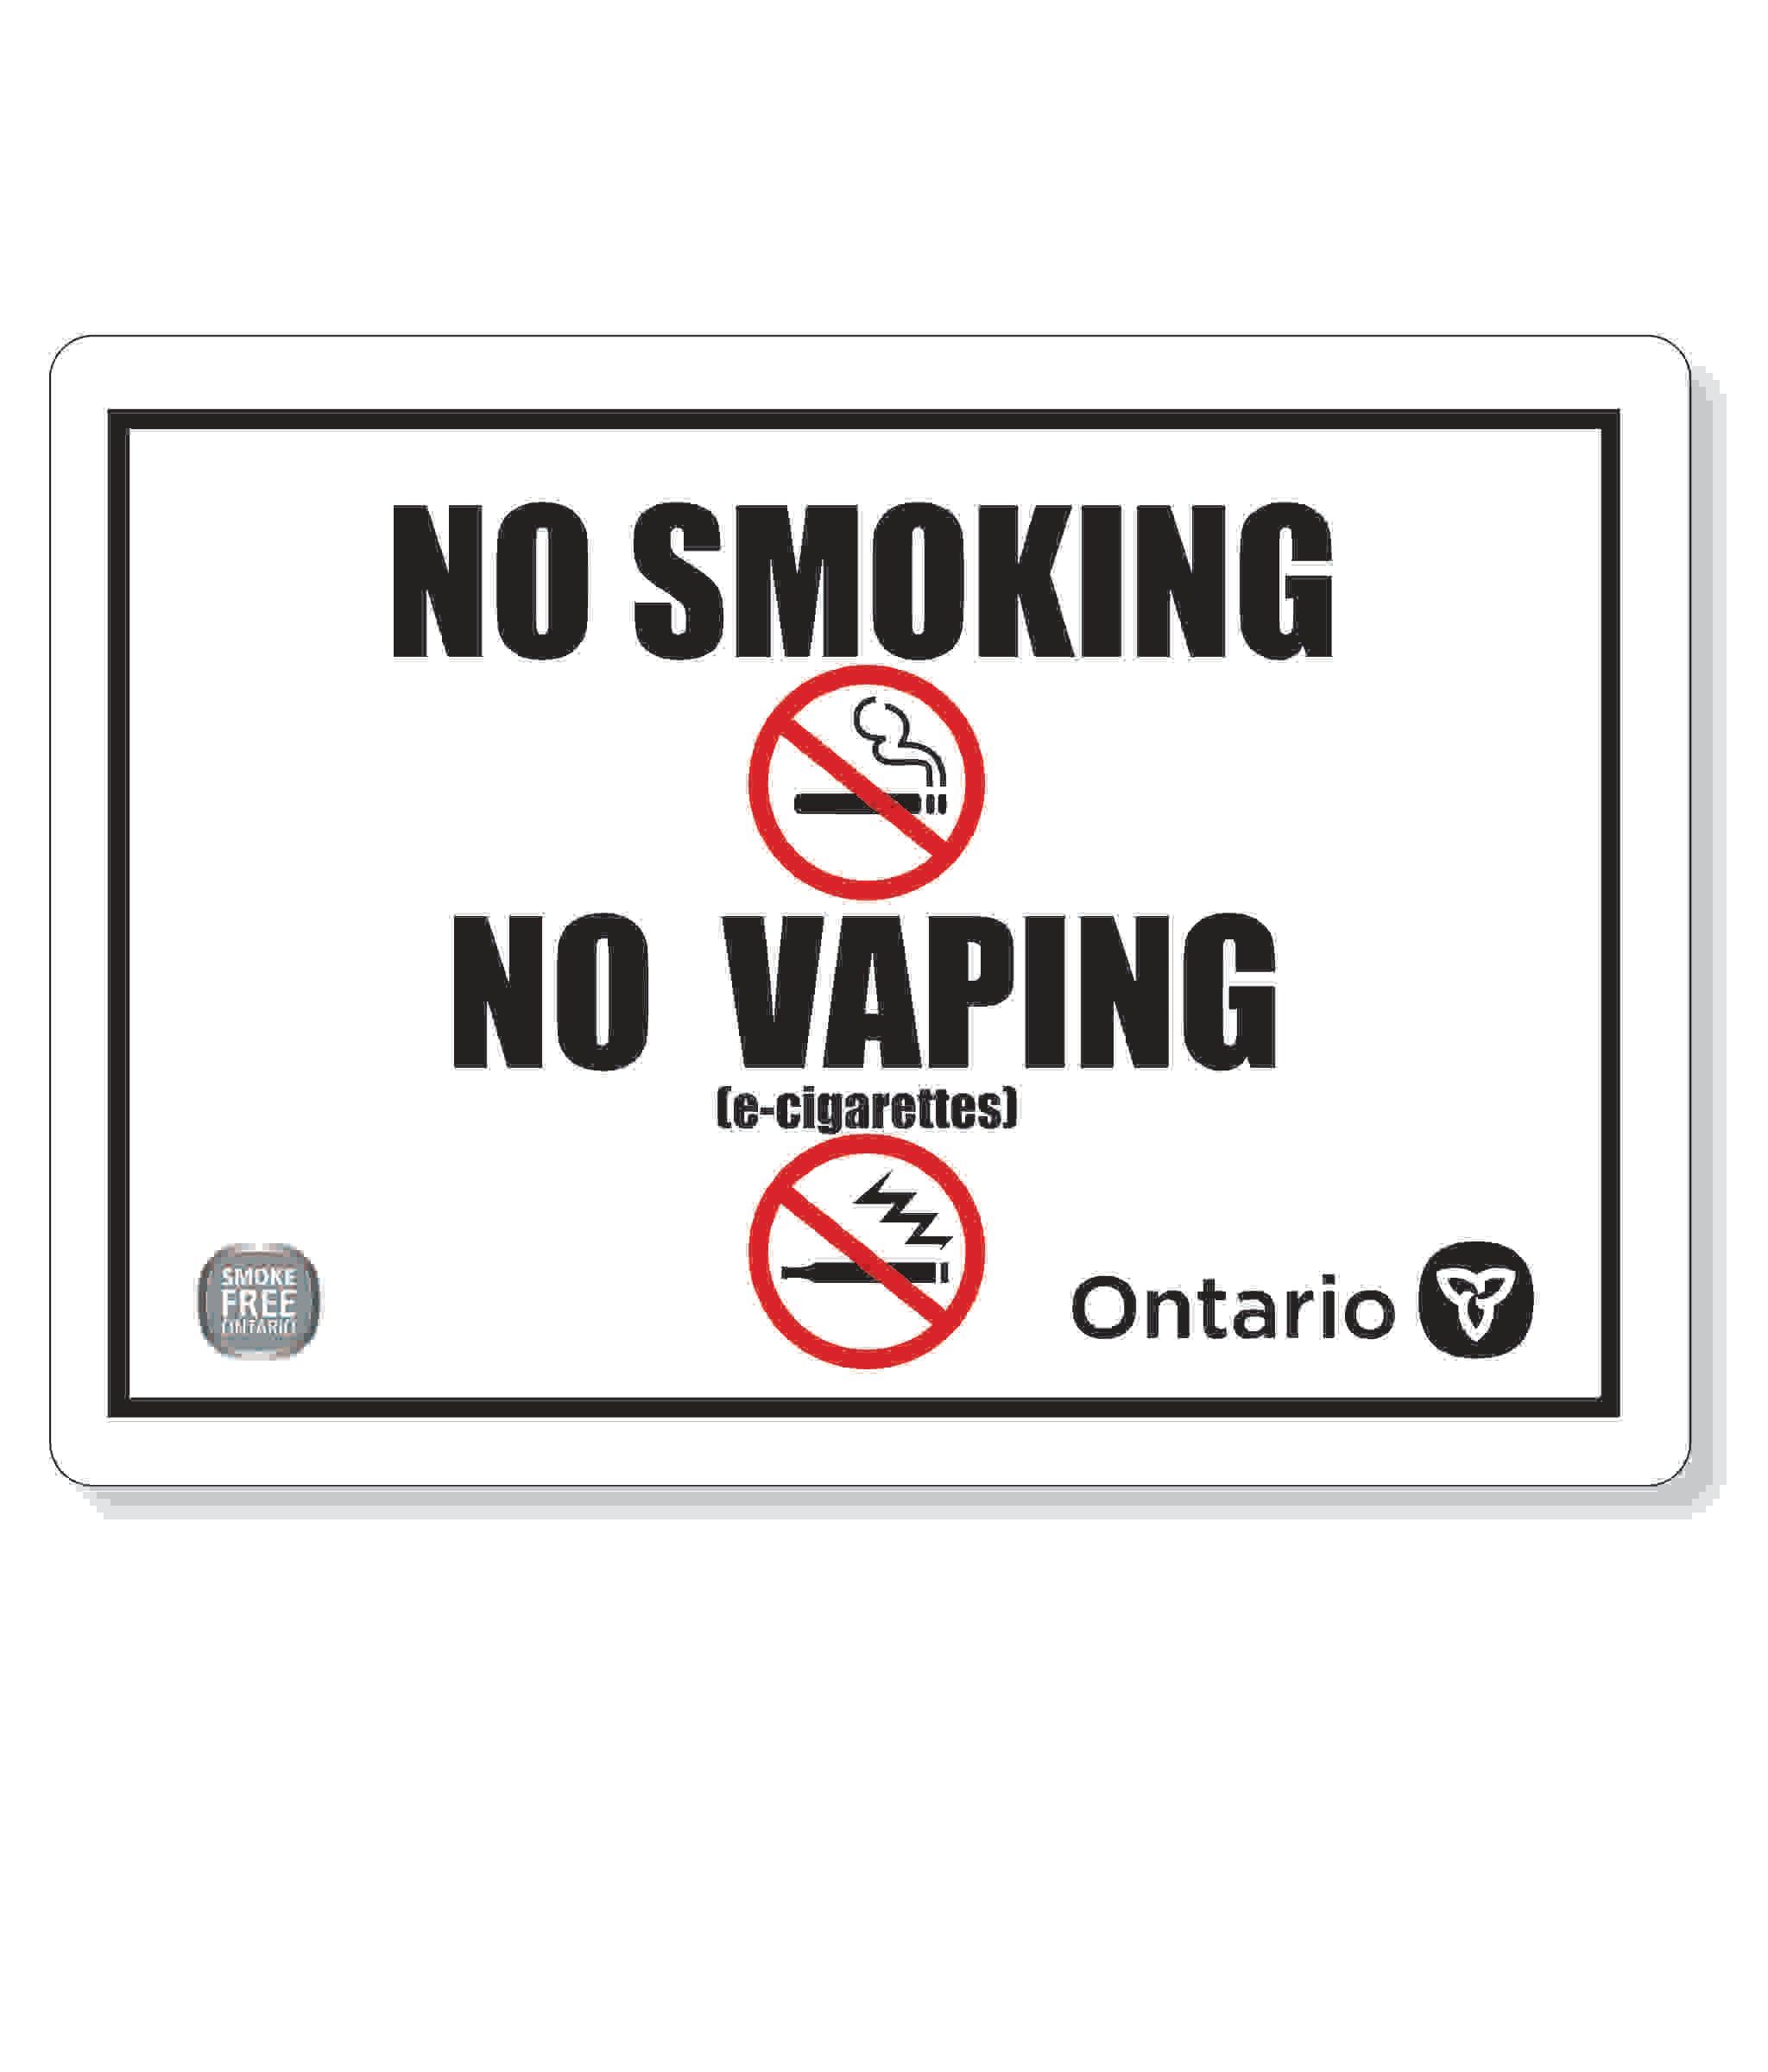 No Smoking, No Vaping decal